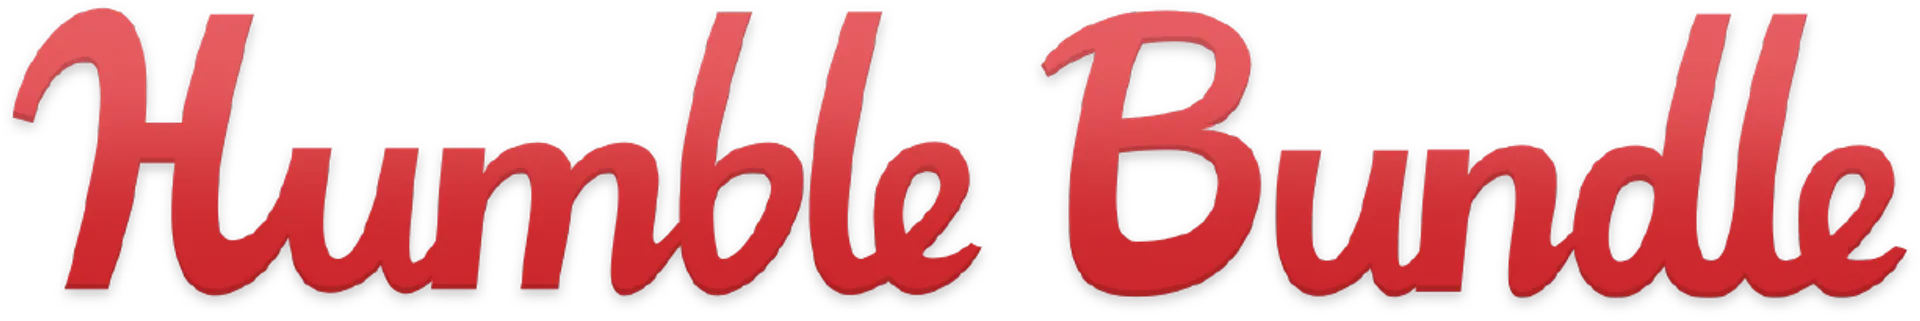 HUMBLE BUNDLE logo